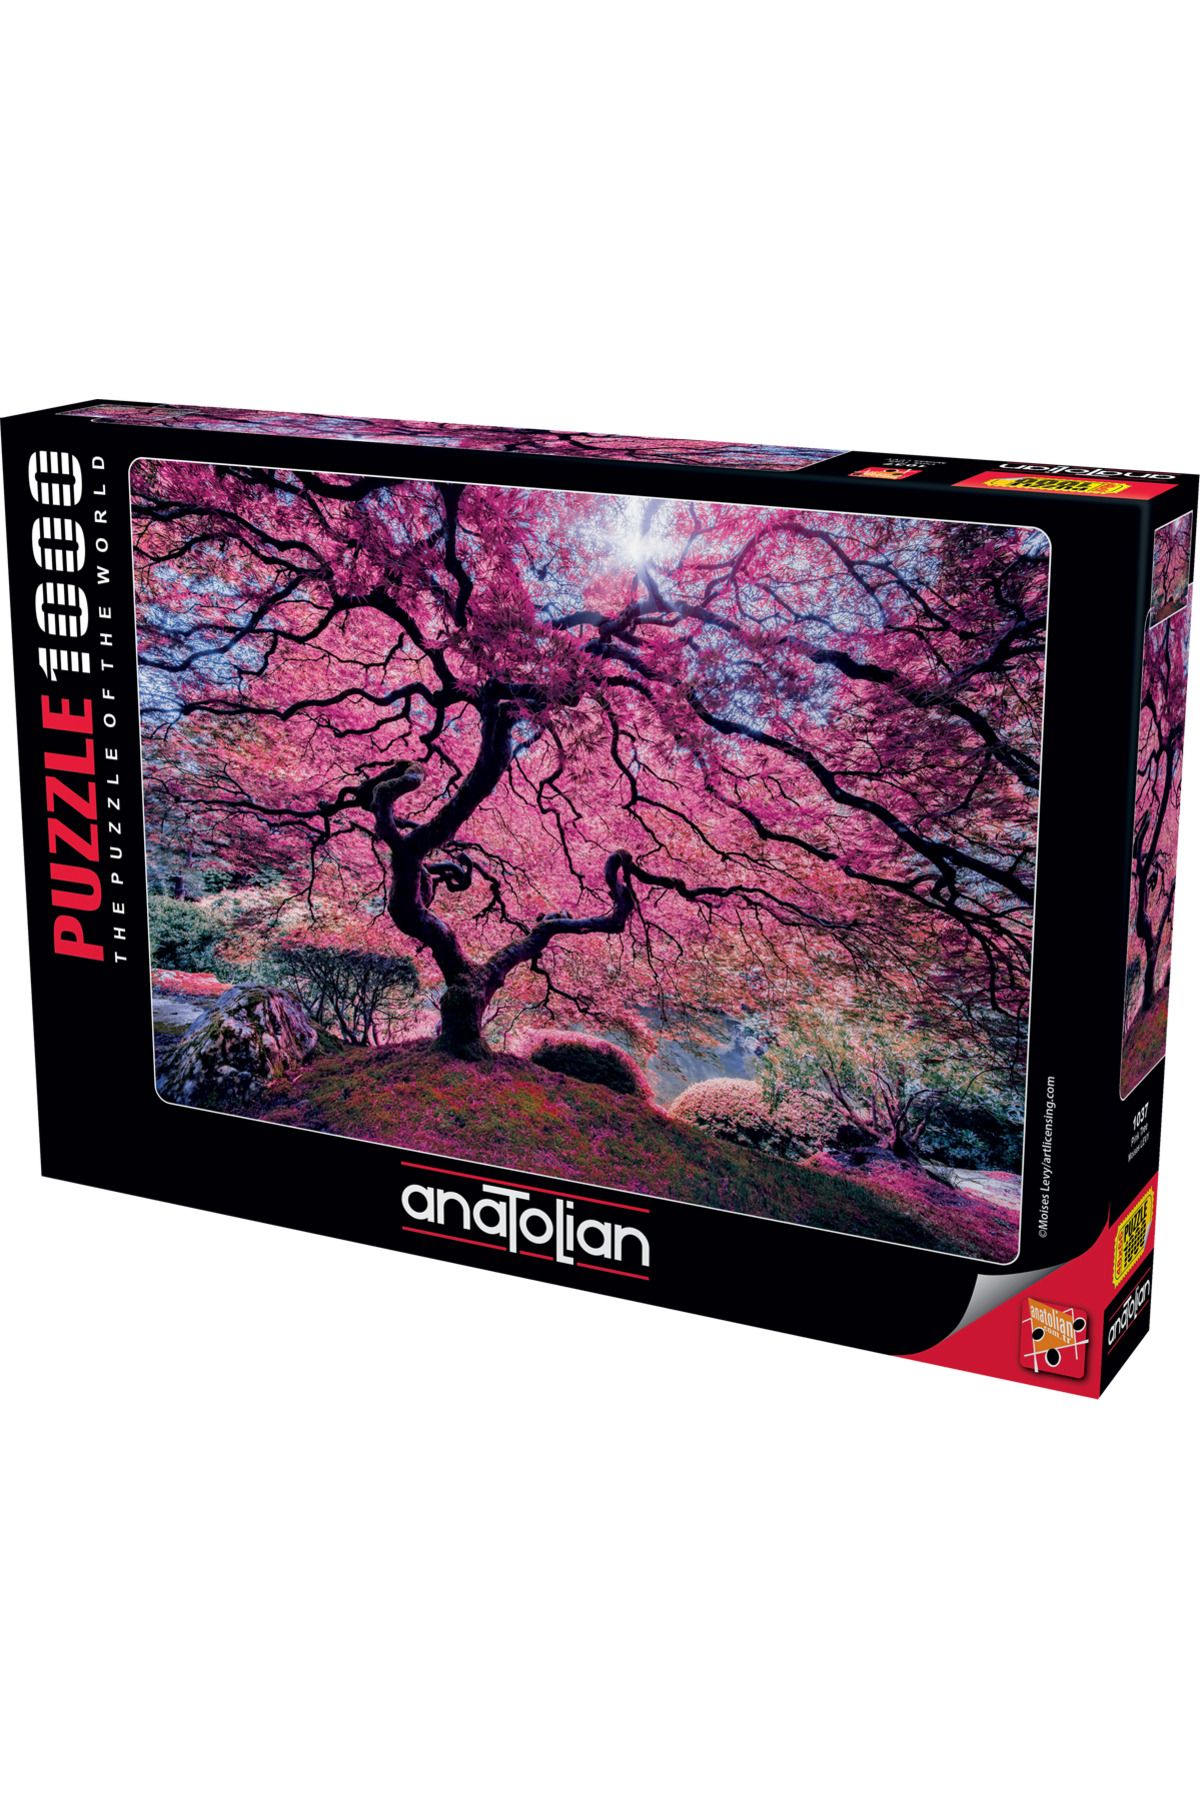 Anatolian Puzzle 1000 Parçalık Puzzle / Pink Tree - Kod:1037